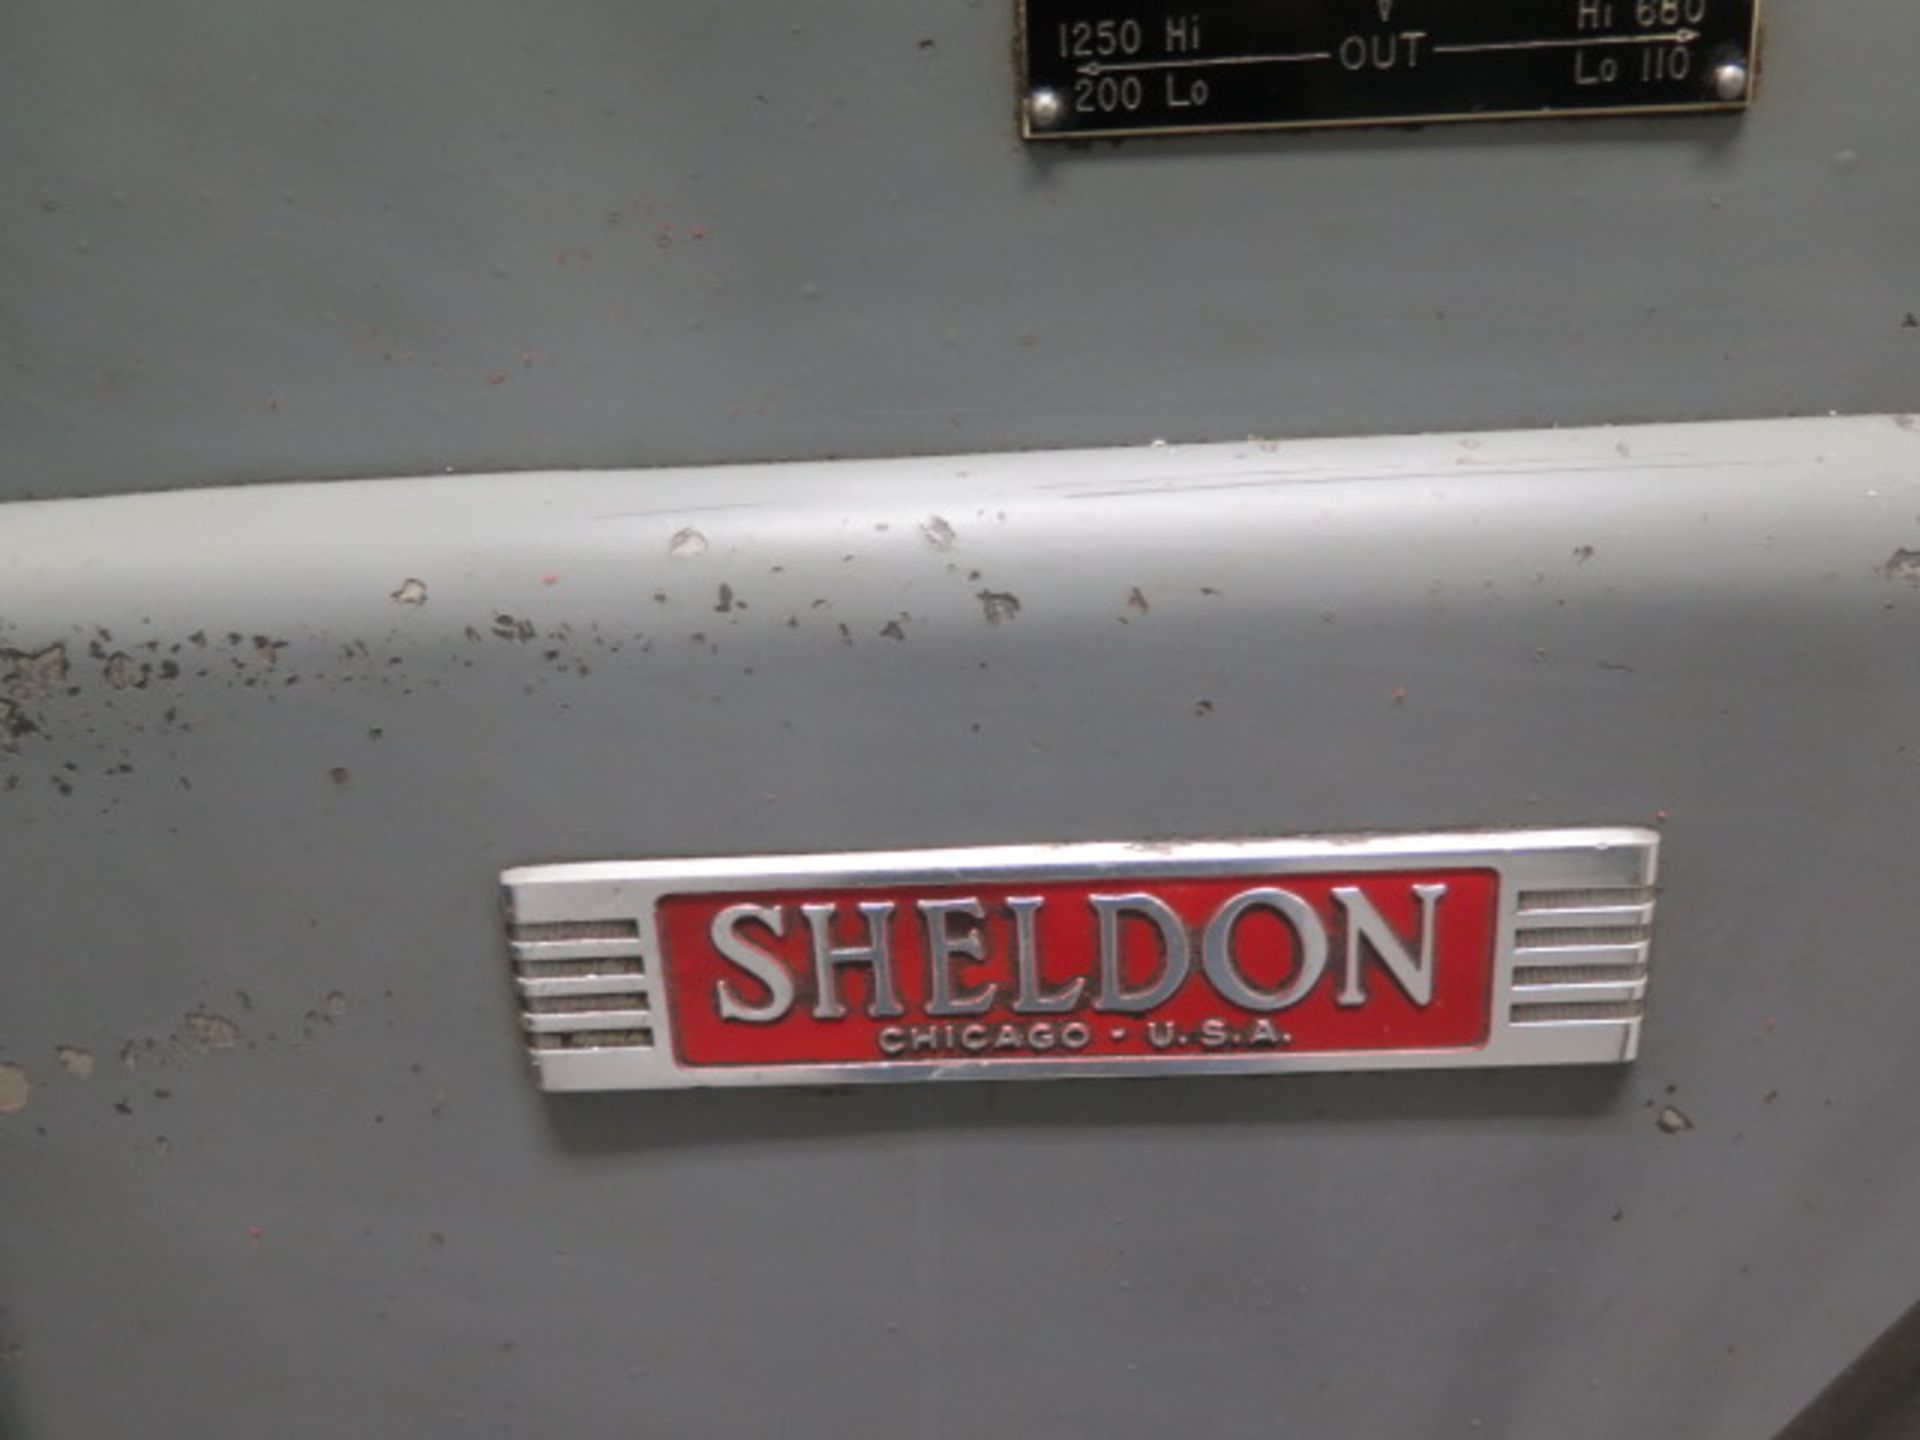 Sheldon GR-72-P 15” x 42” Lathe s/n GR-25883 w/ 45-1250 RPM, Inch Threading, Tailstock, 5C Speed - Image 7 of 7